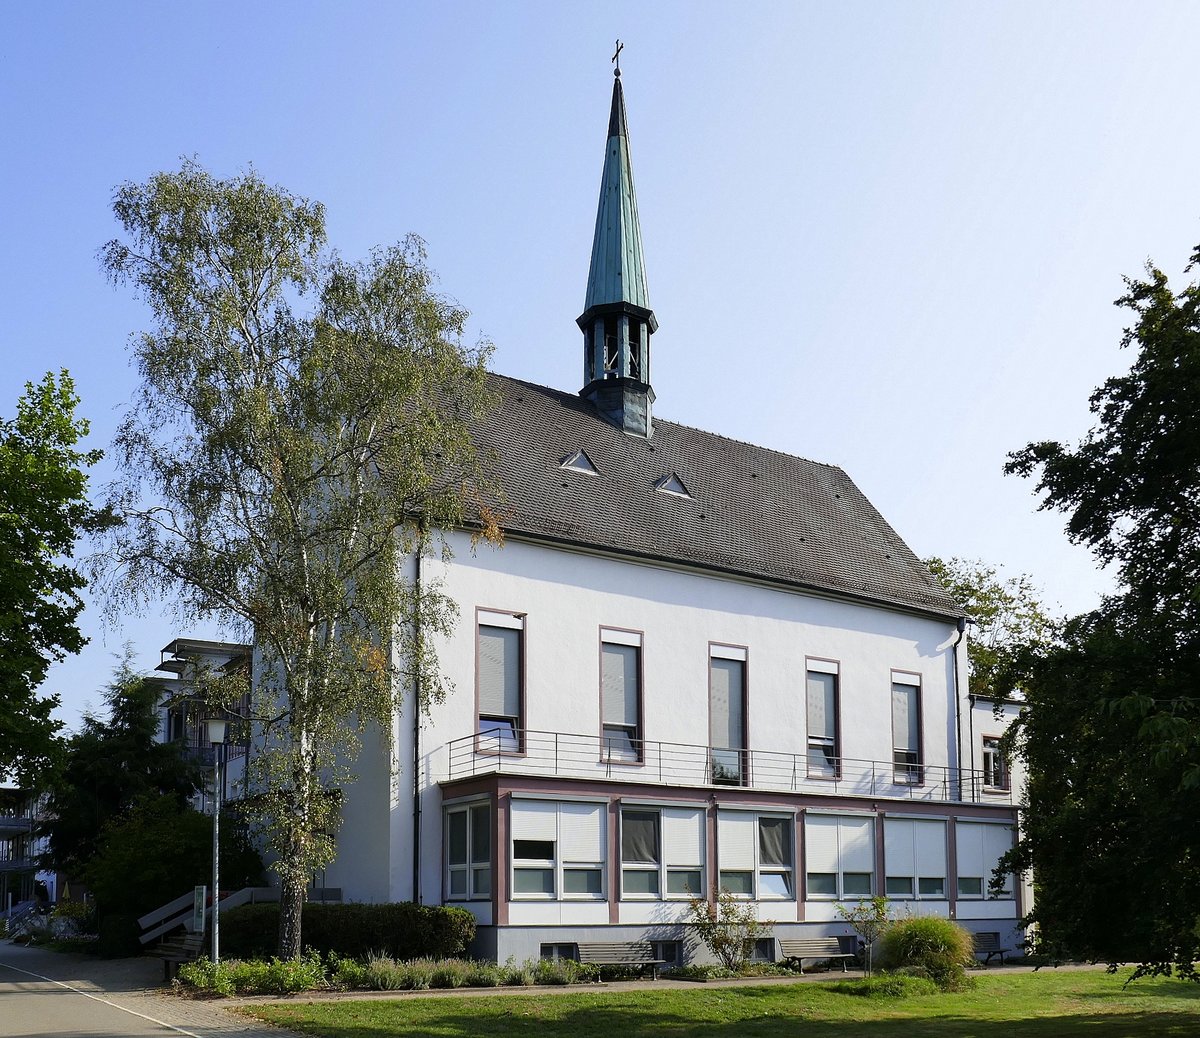 Nonnenweier, die Mutterhauskapelle des evangelischen Diakonissenhauses, Sept.2020